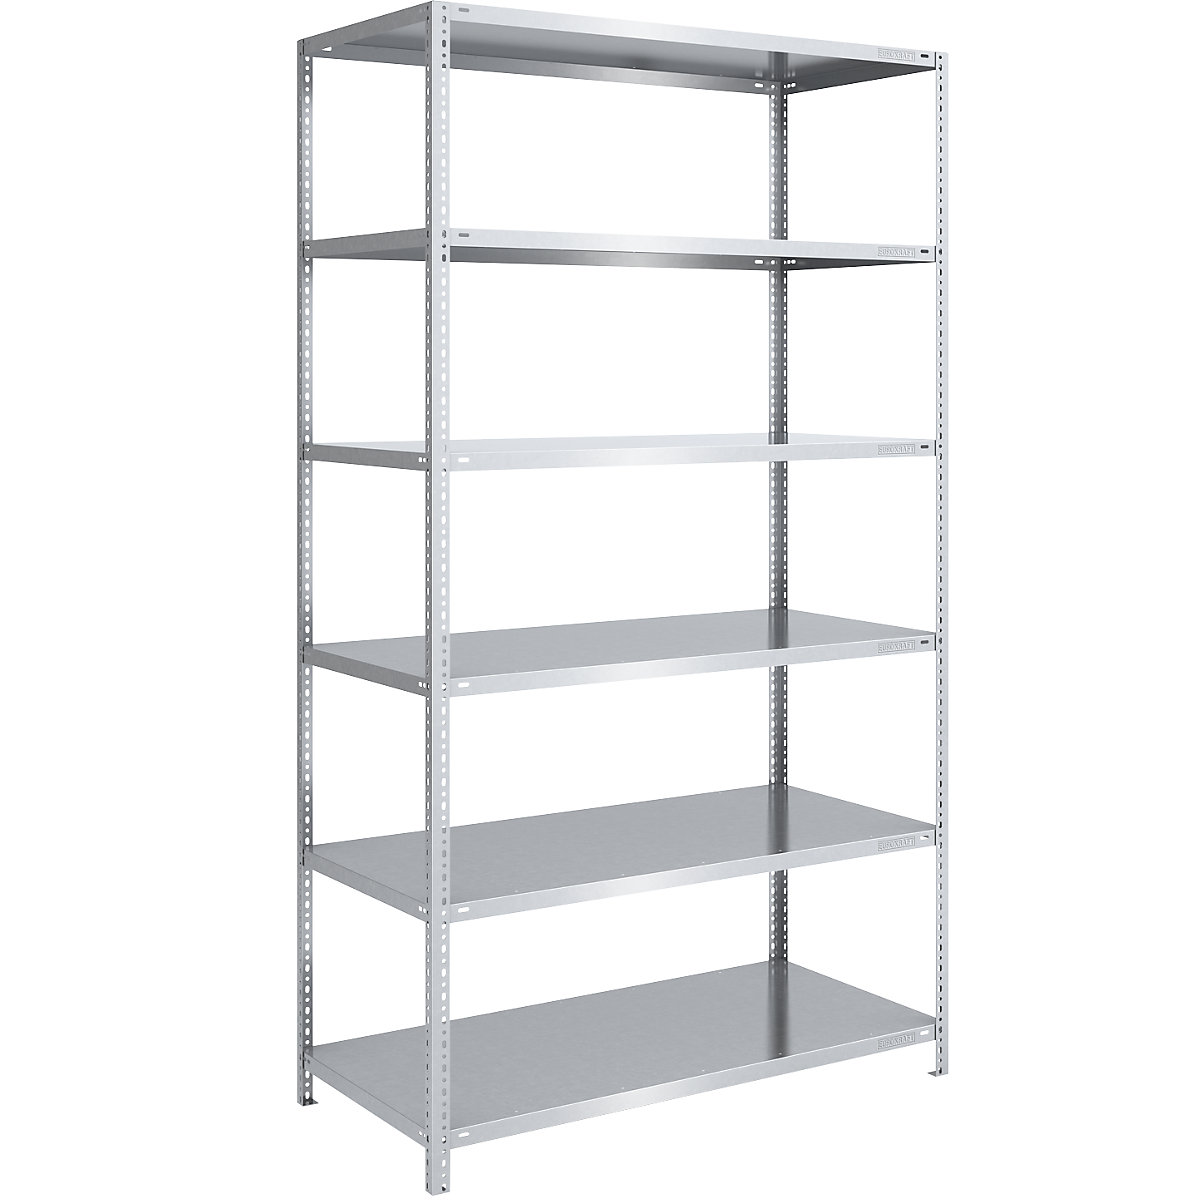 Bolt-together shelf unit, light duty, zinc plated – eurokraft pro, shelf unit height 2500 mm, shelf width 1300 mm, depth 800 mm, standard shelf unit-12